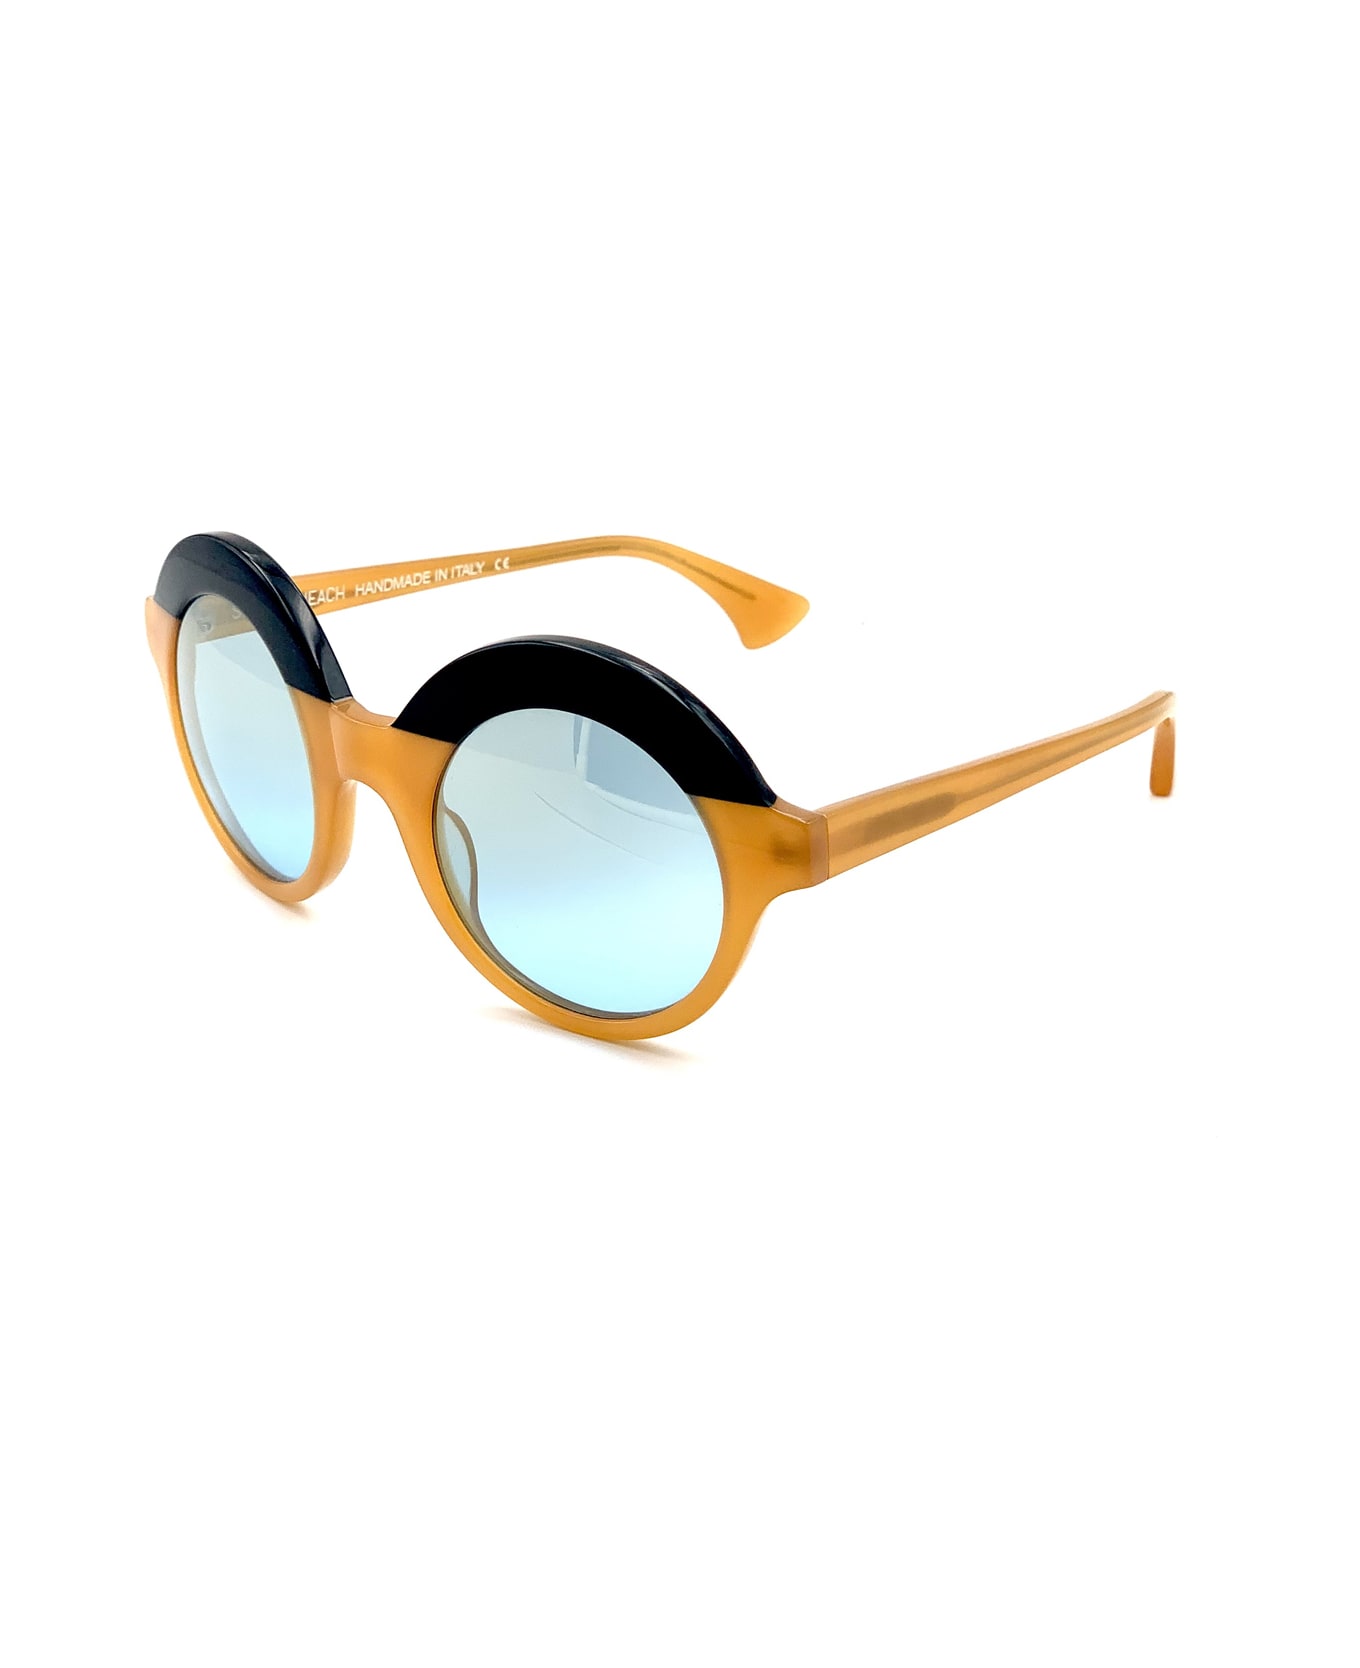 Silvian Heach Okinawa/s 04 Sunglasses - Arancione サングラス